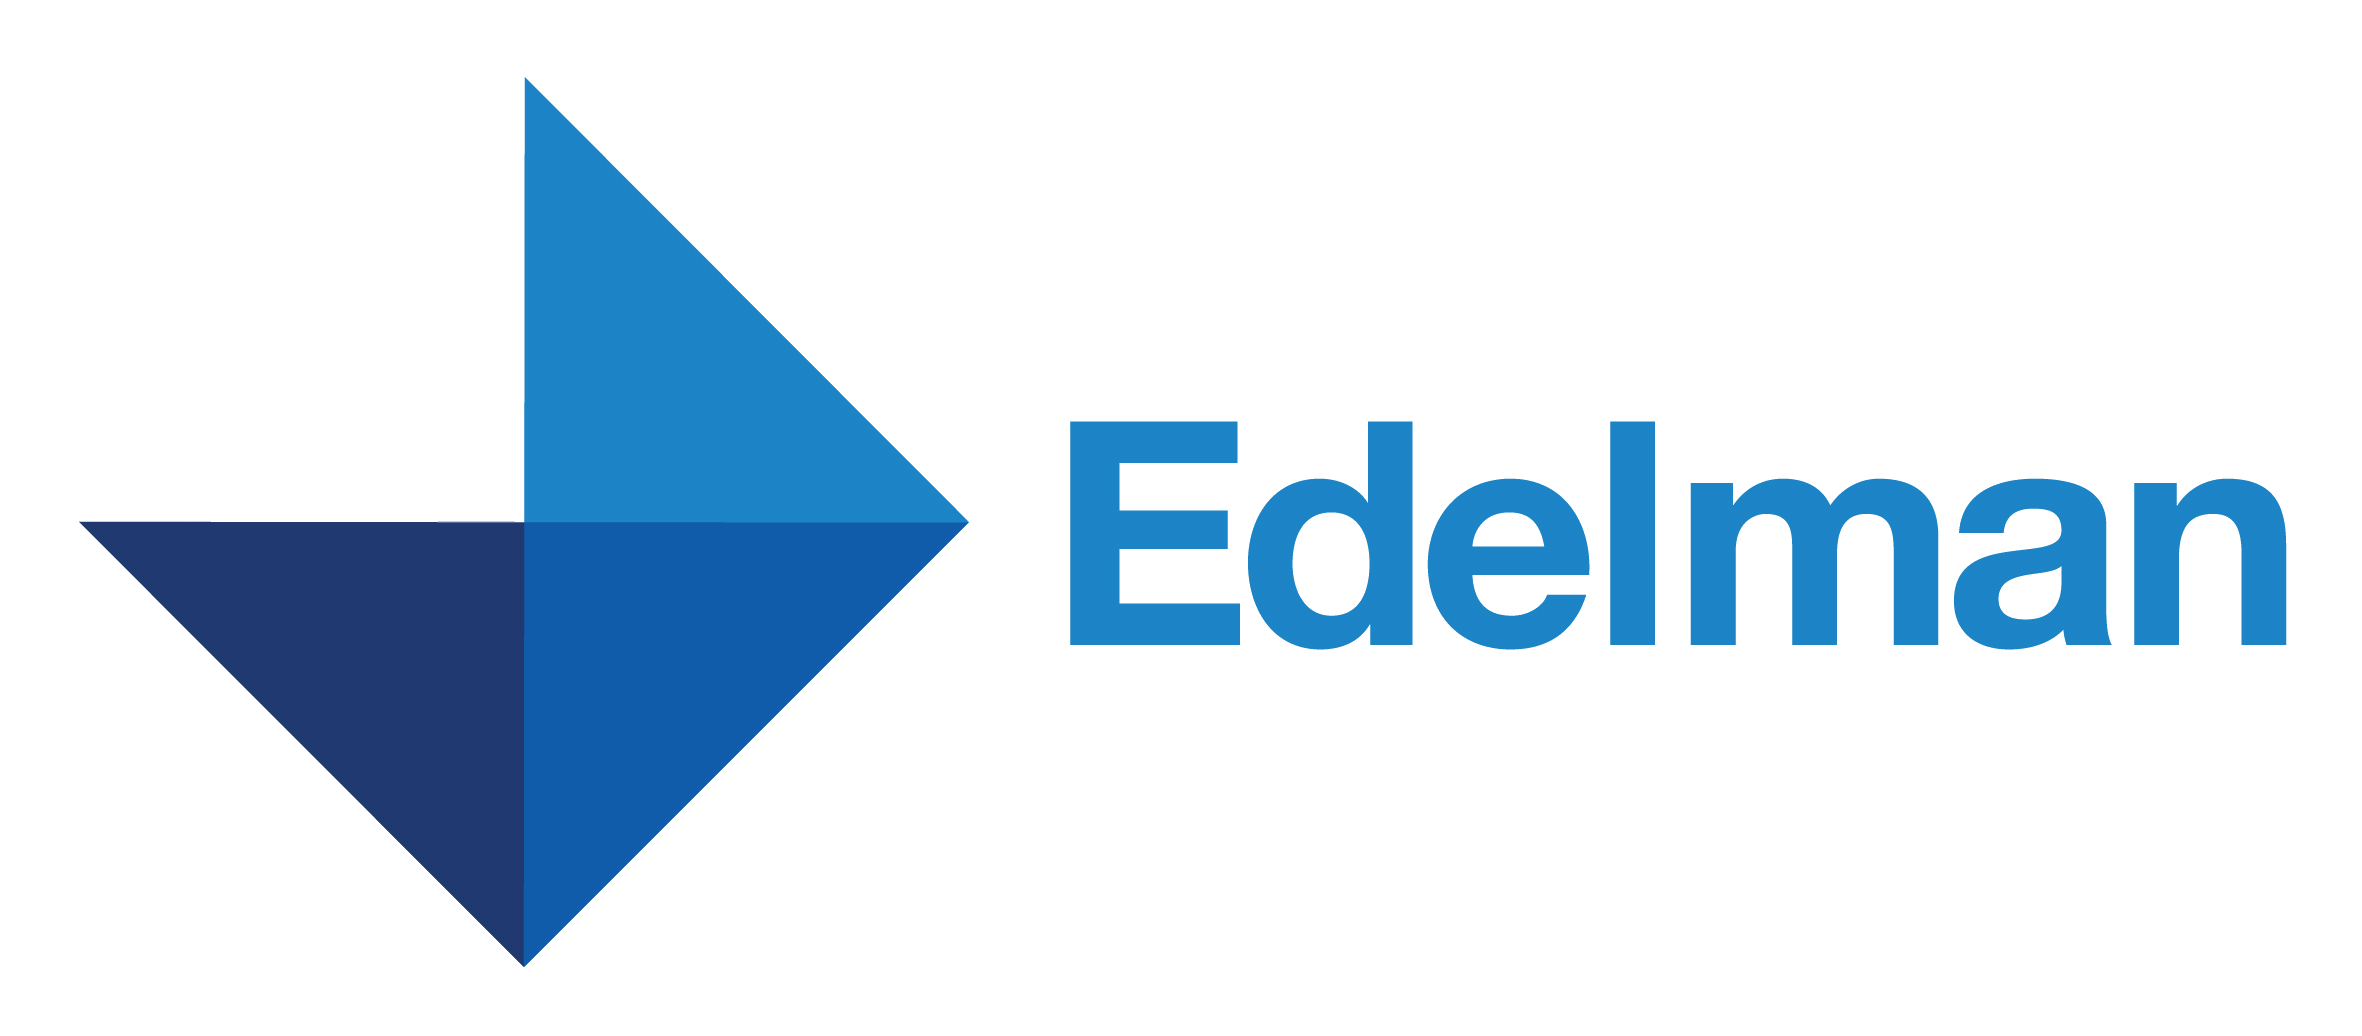 Edelman logo Transparent